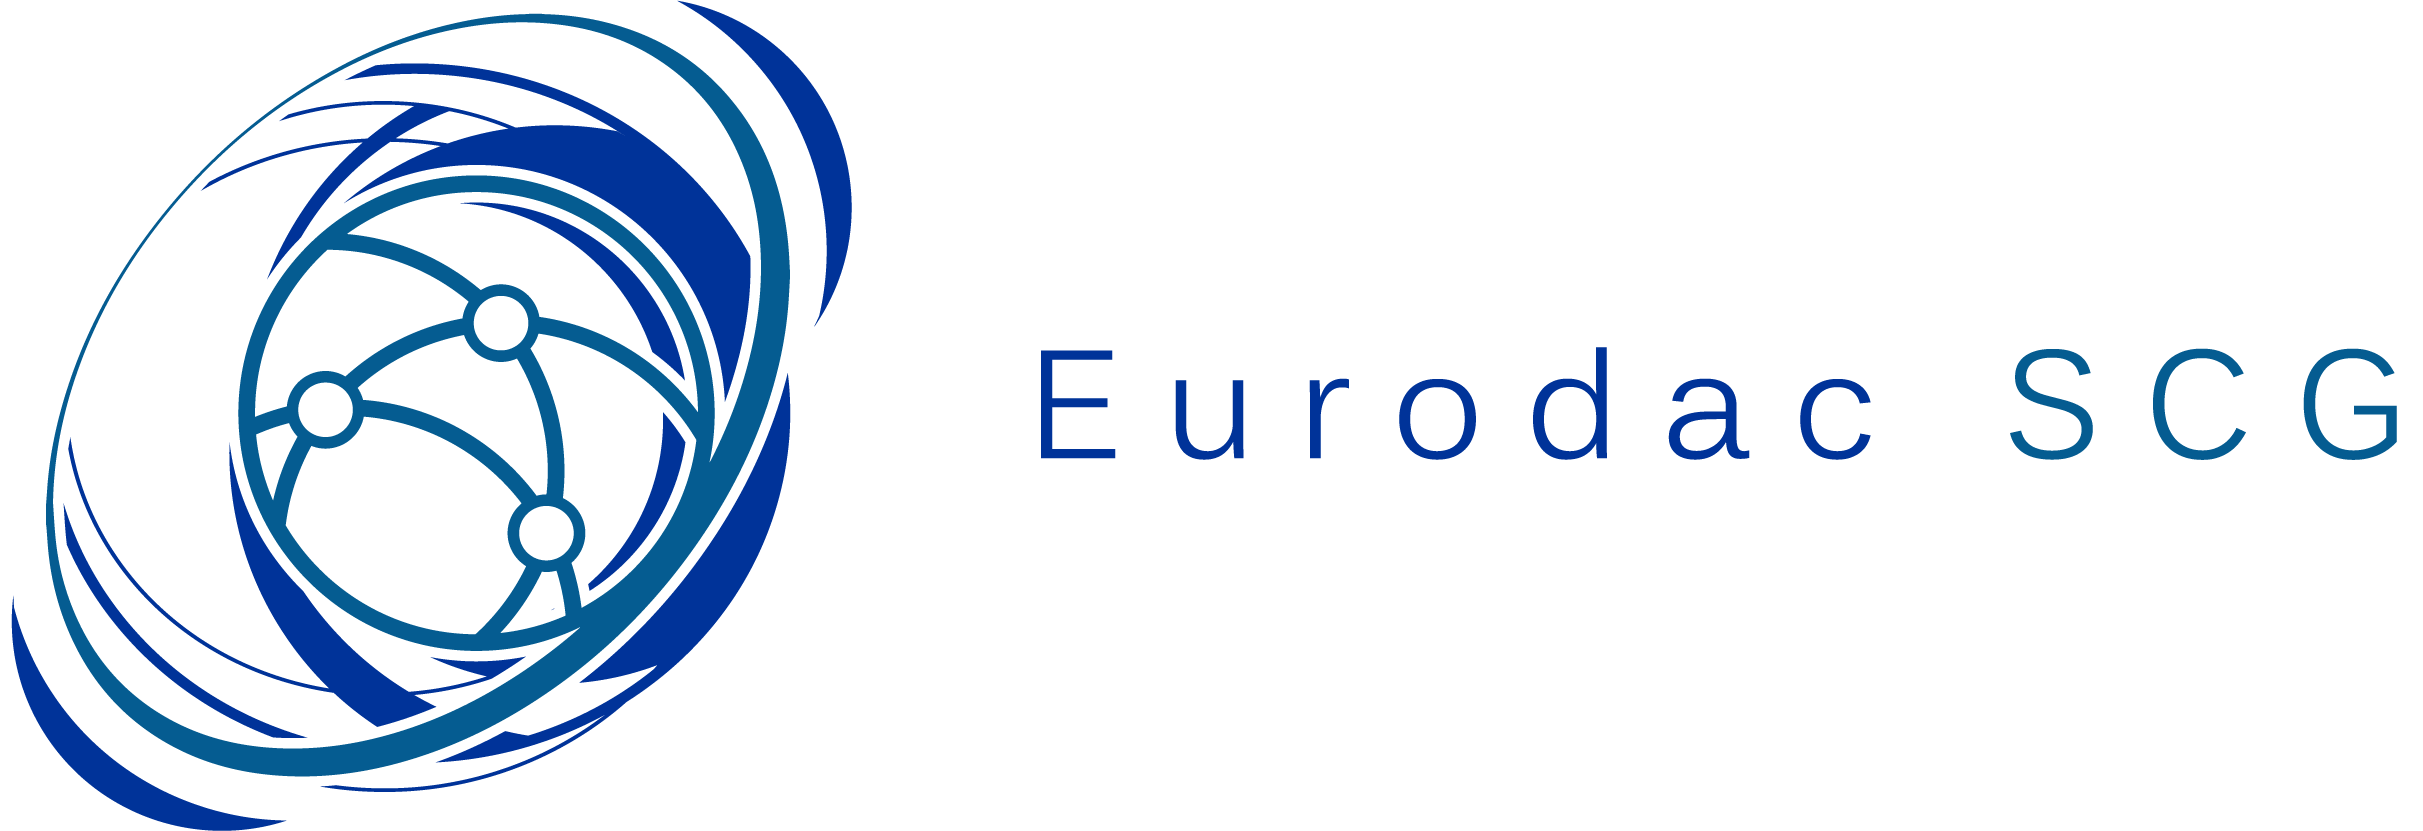 https://edps.europa.eu/sites/edp/files/eurodac_scg_logo.png